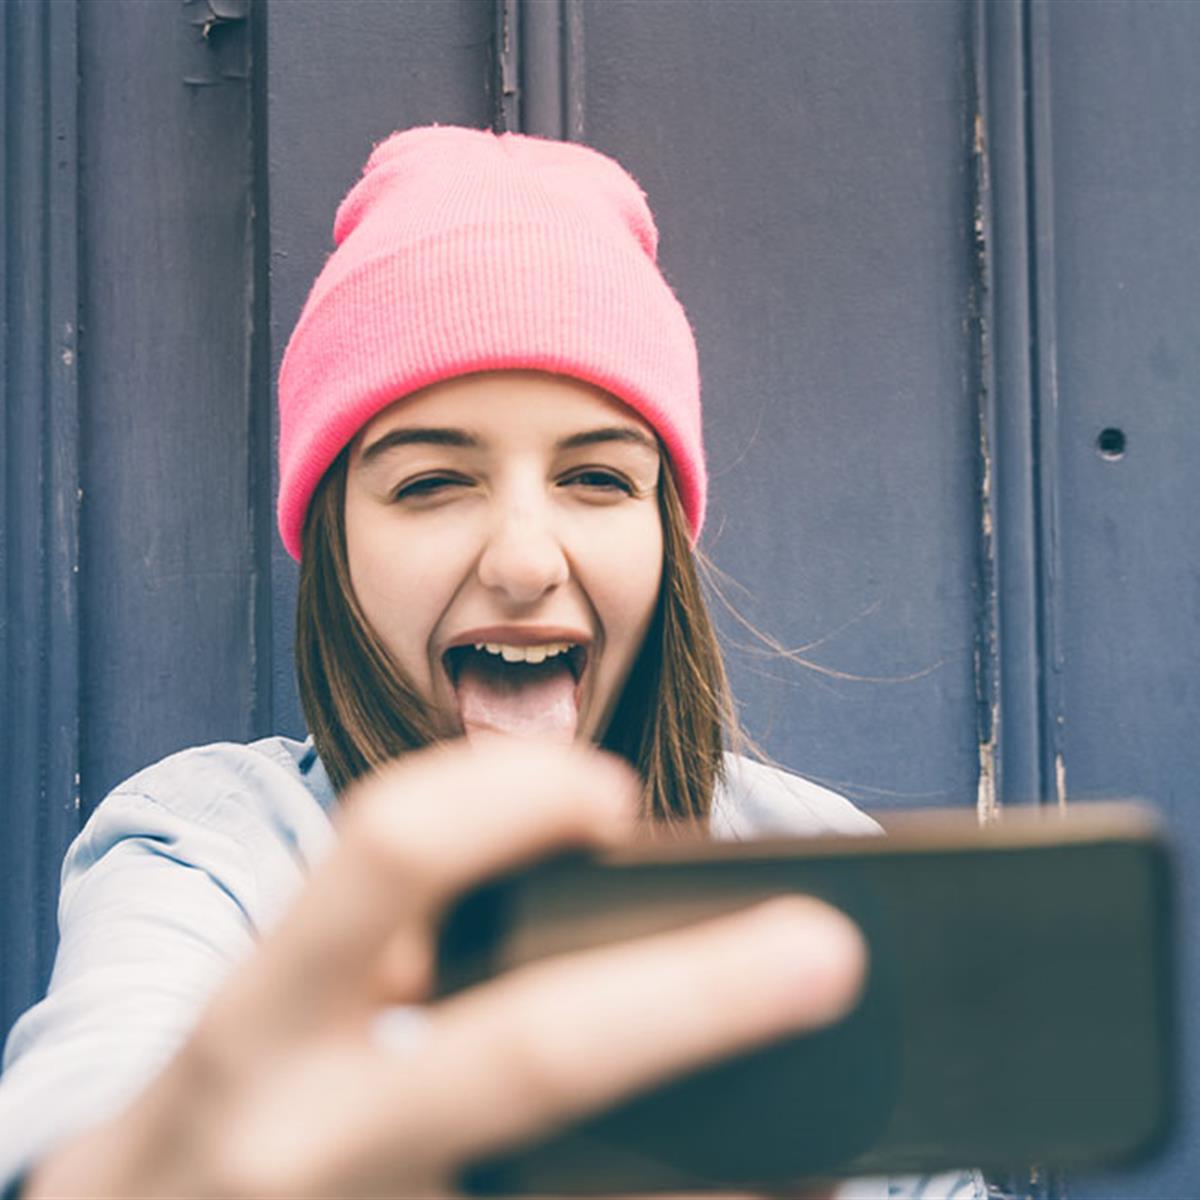 18 Teens Girls Giving Blowjobs - Dangerous Internet Challenges â€“ Understanding Their Appeal to Kids -  HealthyChildren.org